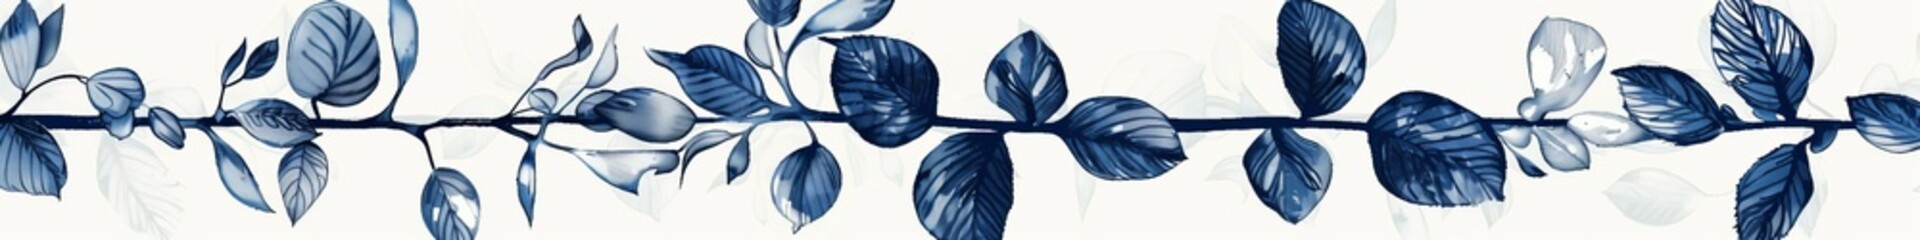 botanical leaf outline and silhouette print modern blue and white --ar 8:1 Job ID: 9a819f5e-deda-4efa-ad74-8a3477d119f9